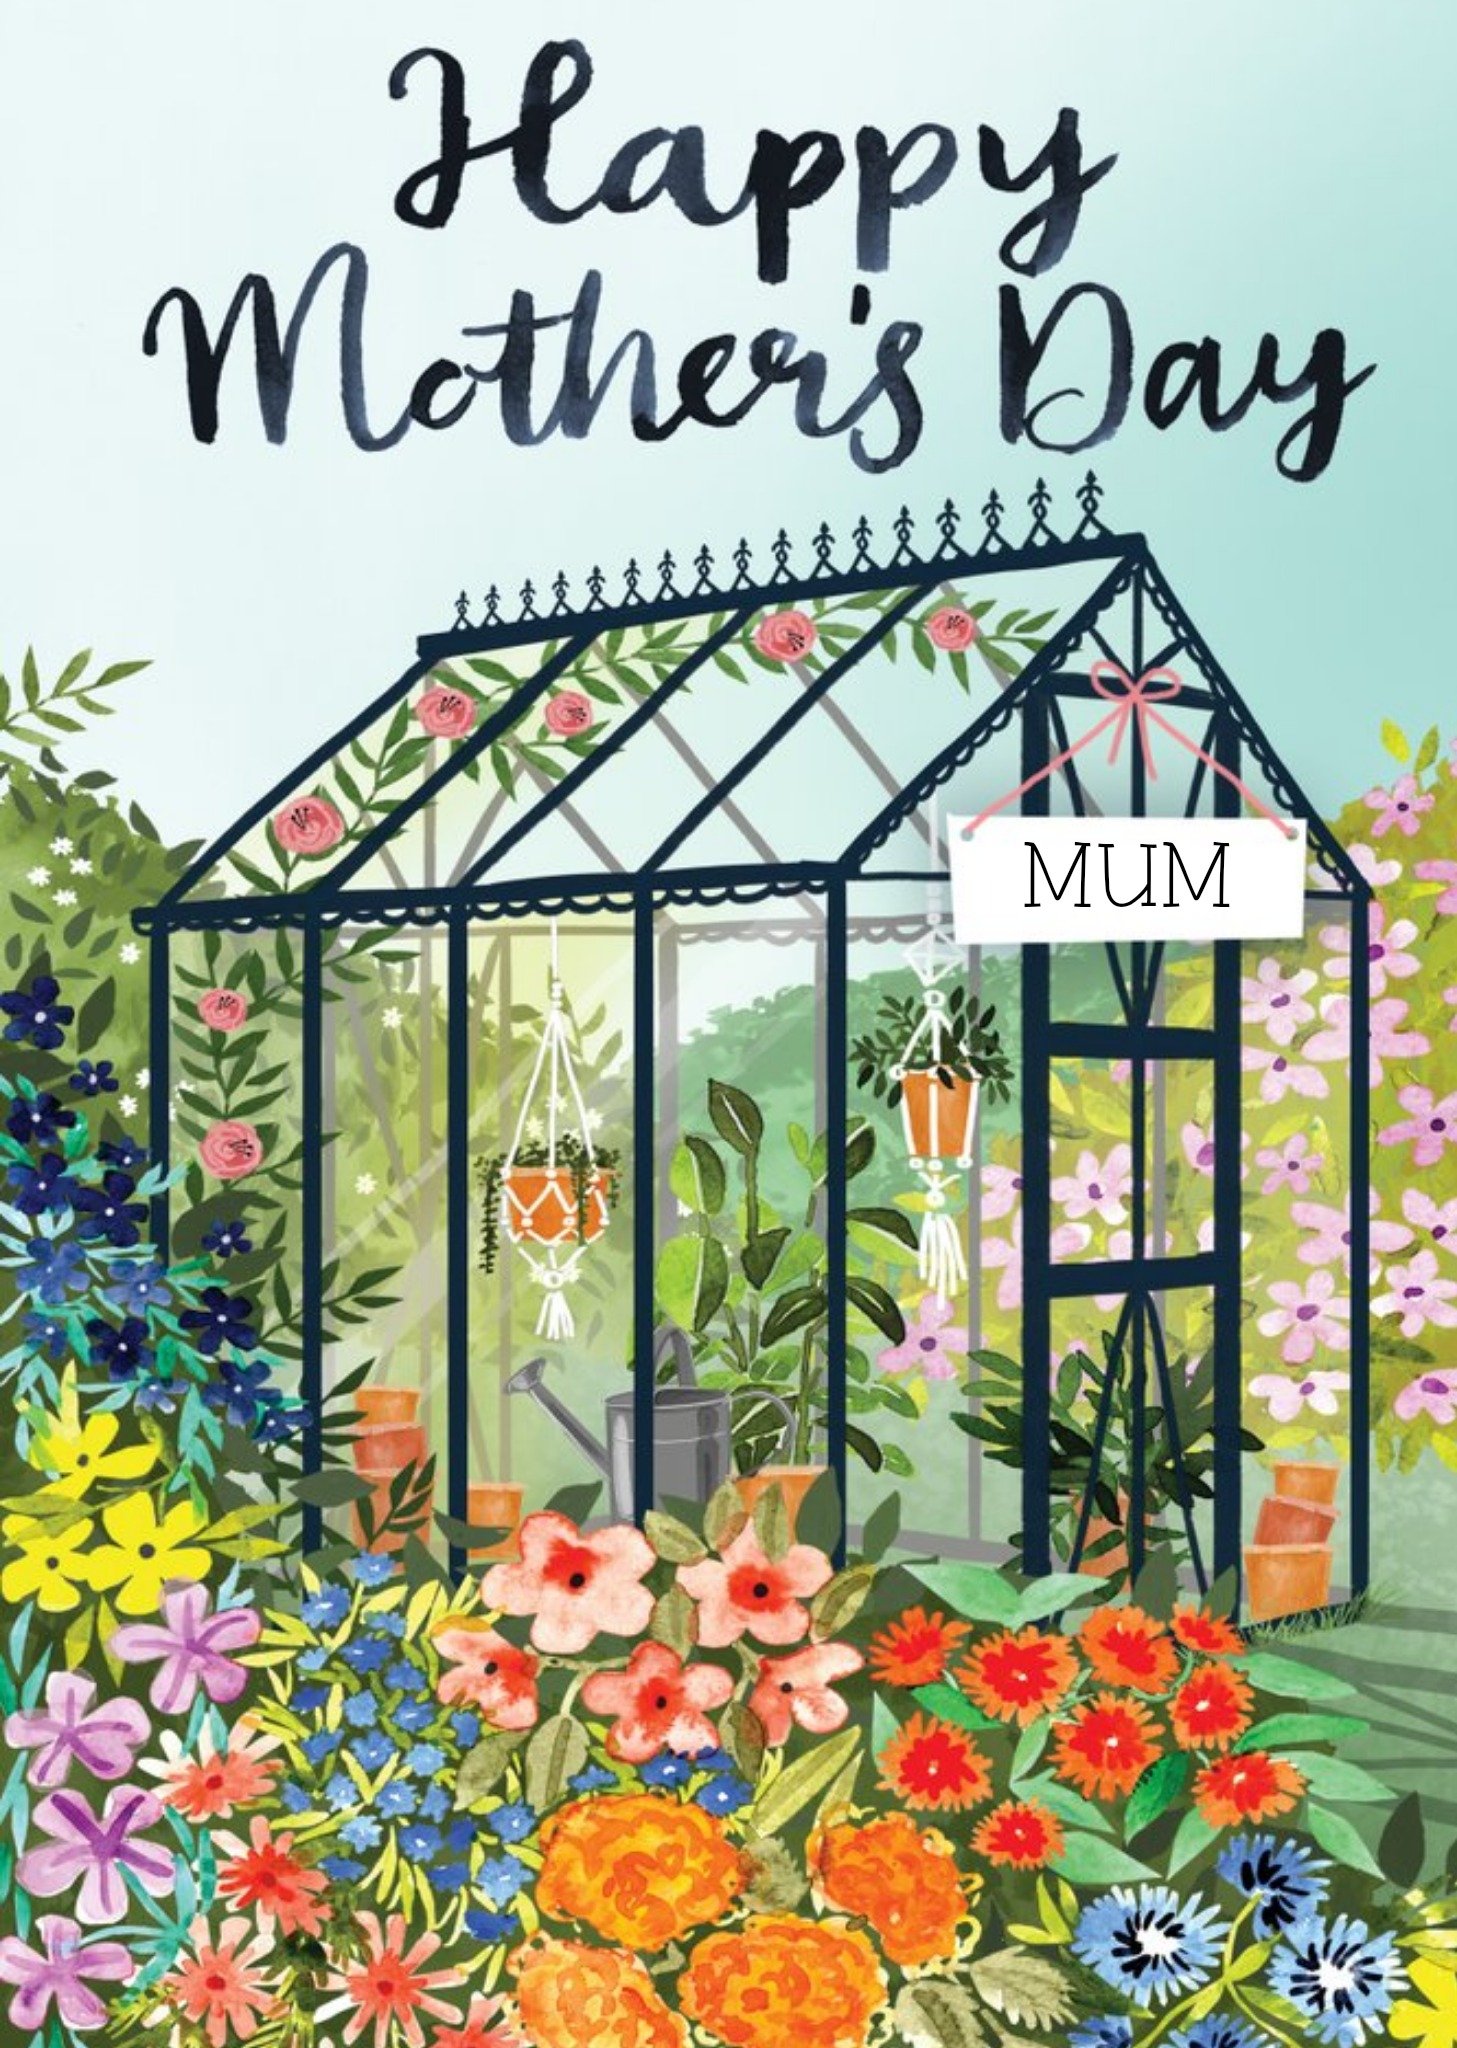 Moonpig Mum's Greenhouse Beautiful Painted Garden Mother's Day Card Ecard